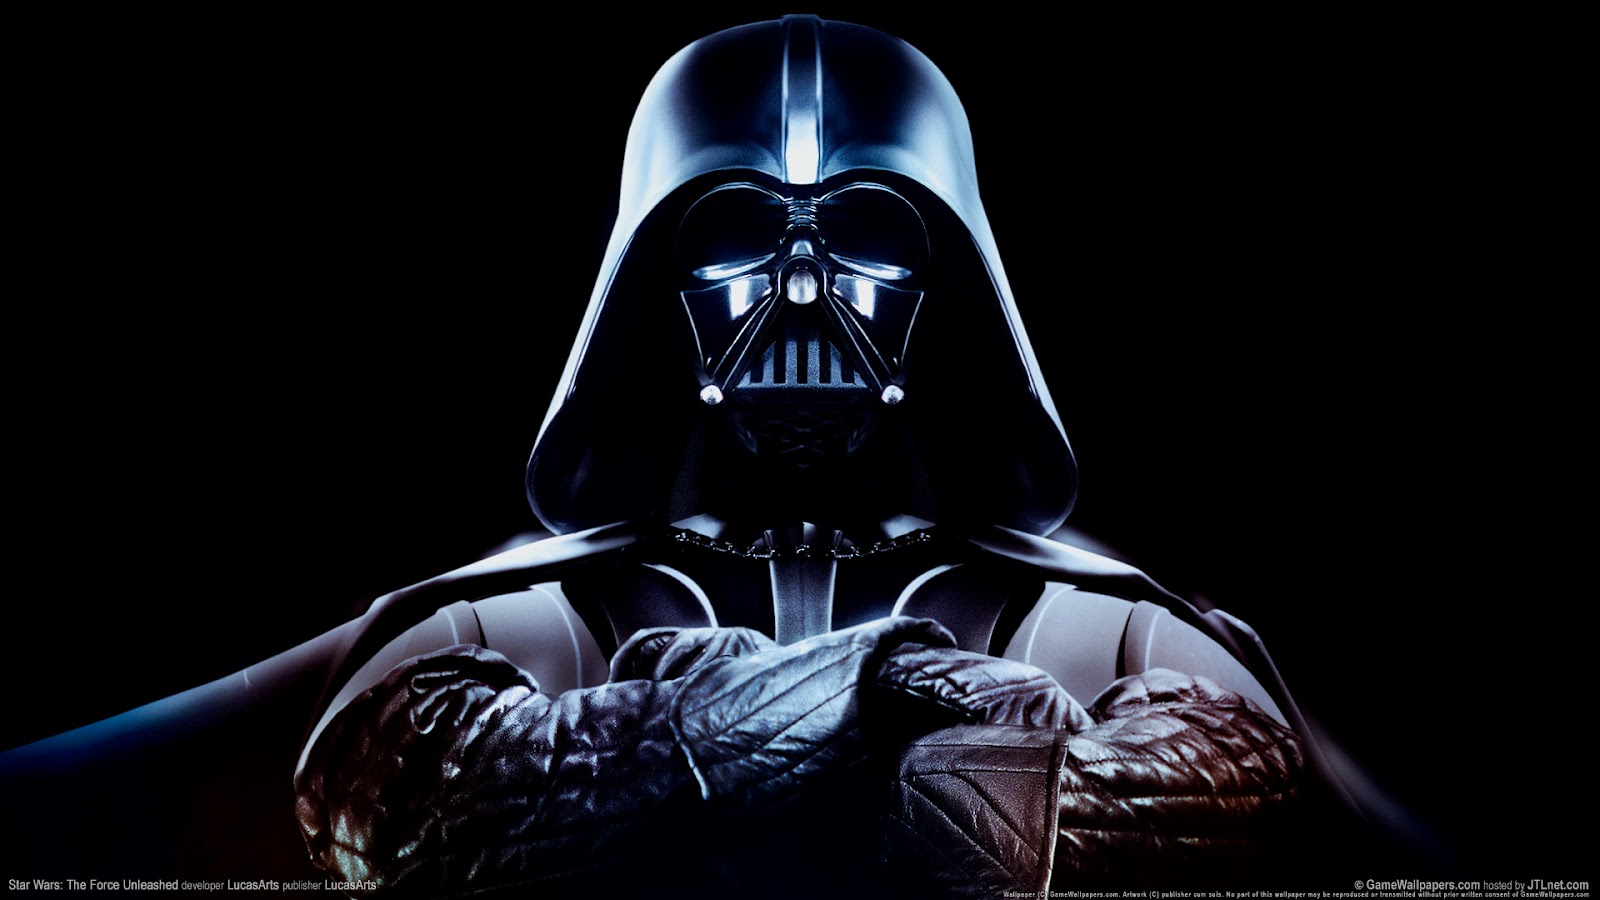 https://blogger.googleusercontent.com/img/b/R29vZ2xl/AVvXsEj2Ty6WcCdfLnUWOssRiOgO34mYF4QfVH21l2A7rlFSus8ZHzRHgDucfglEcvmfU2NtVtioRcZN4KjFCyc2WEG3FuzzwhRrehzqdhHxOfBNGMxFtYytf7EImKCQCb4bNhaggd3eo8ELM-YY/s1600/Classical-Wallpaper-Darth-Vader-star-wars-25852934-1920-1080.jpg